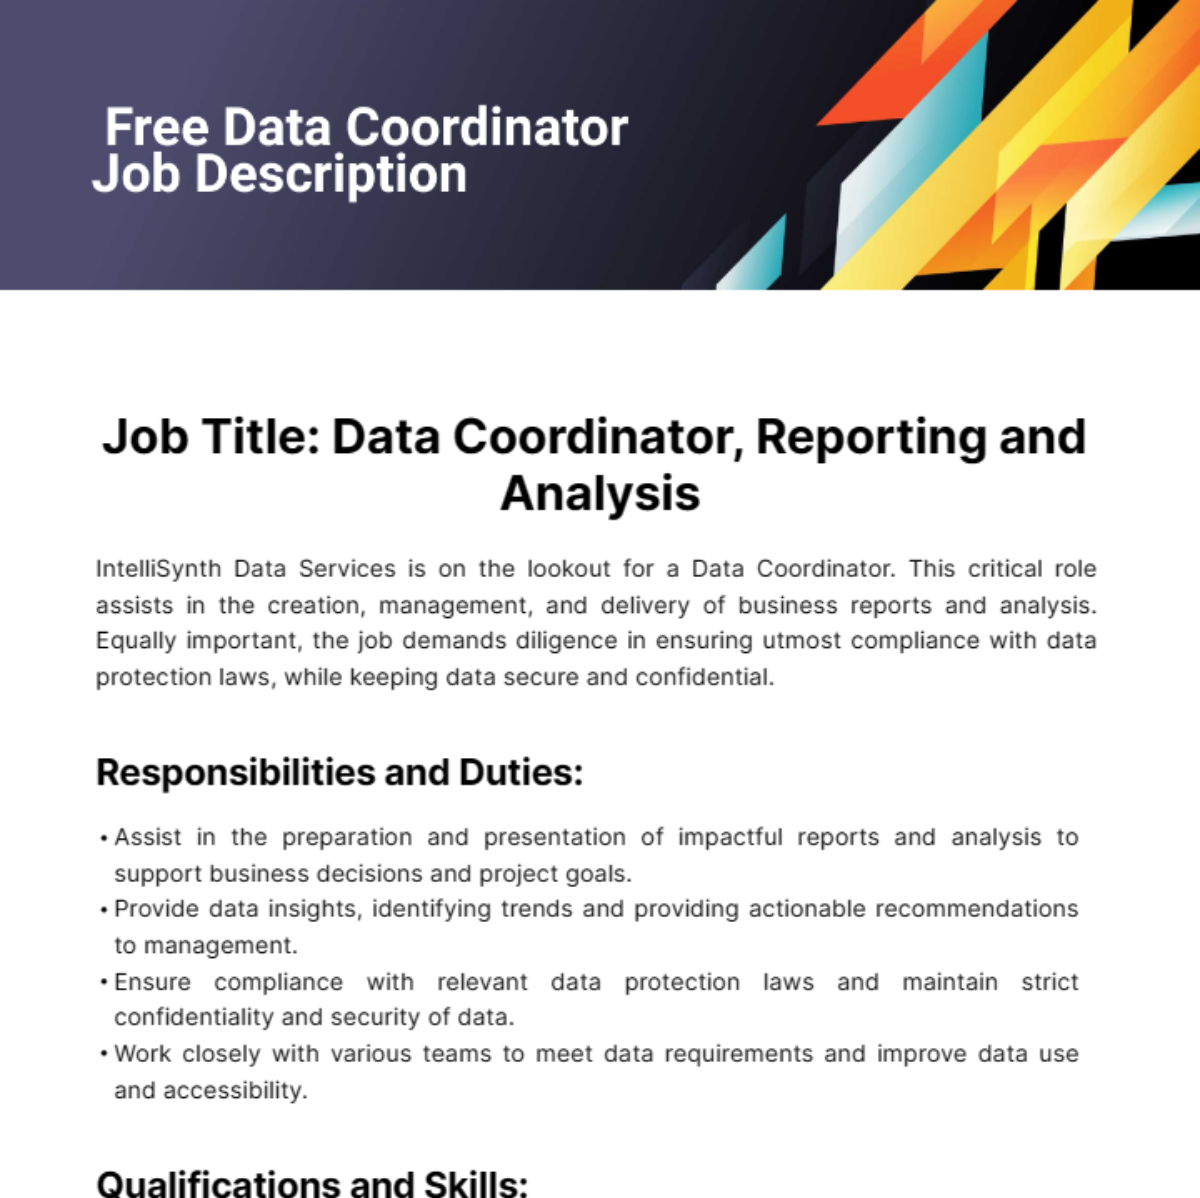 Free Data Coordinator Job Description Template